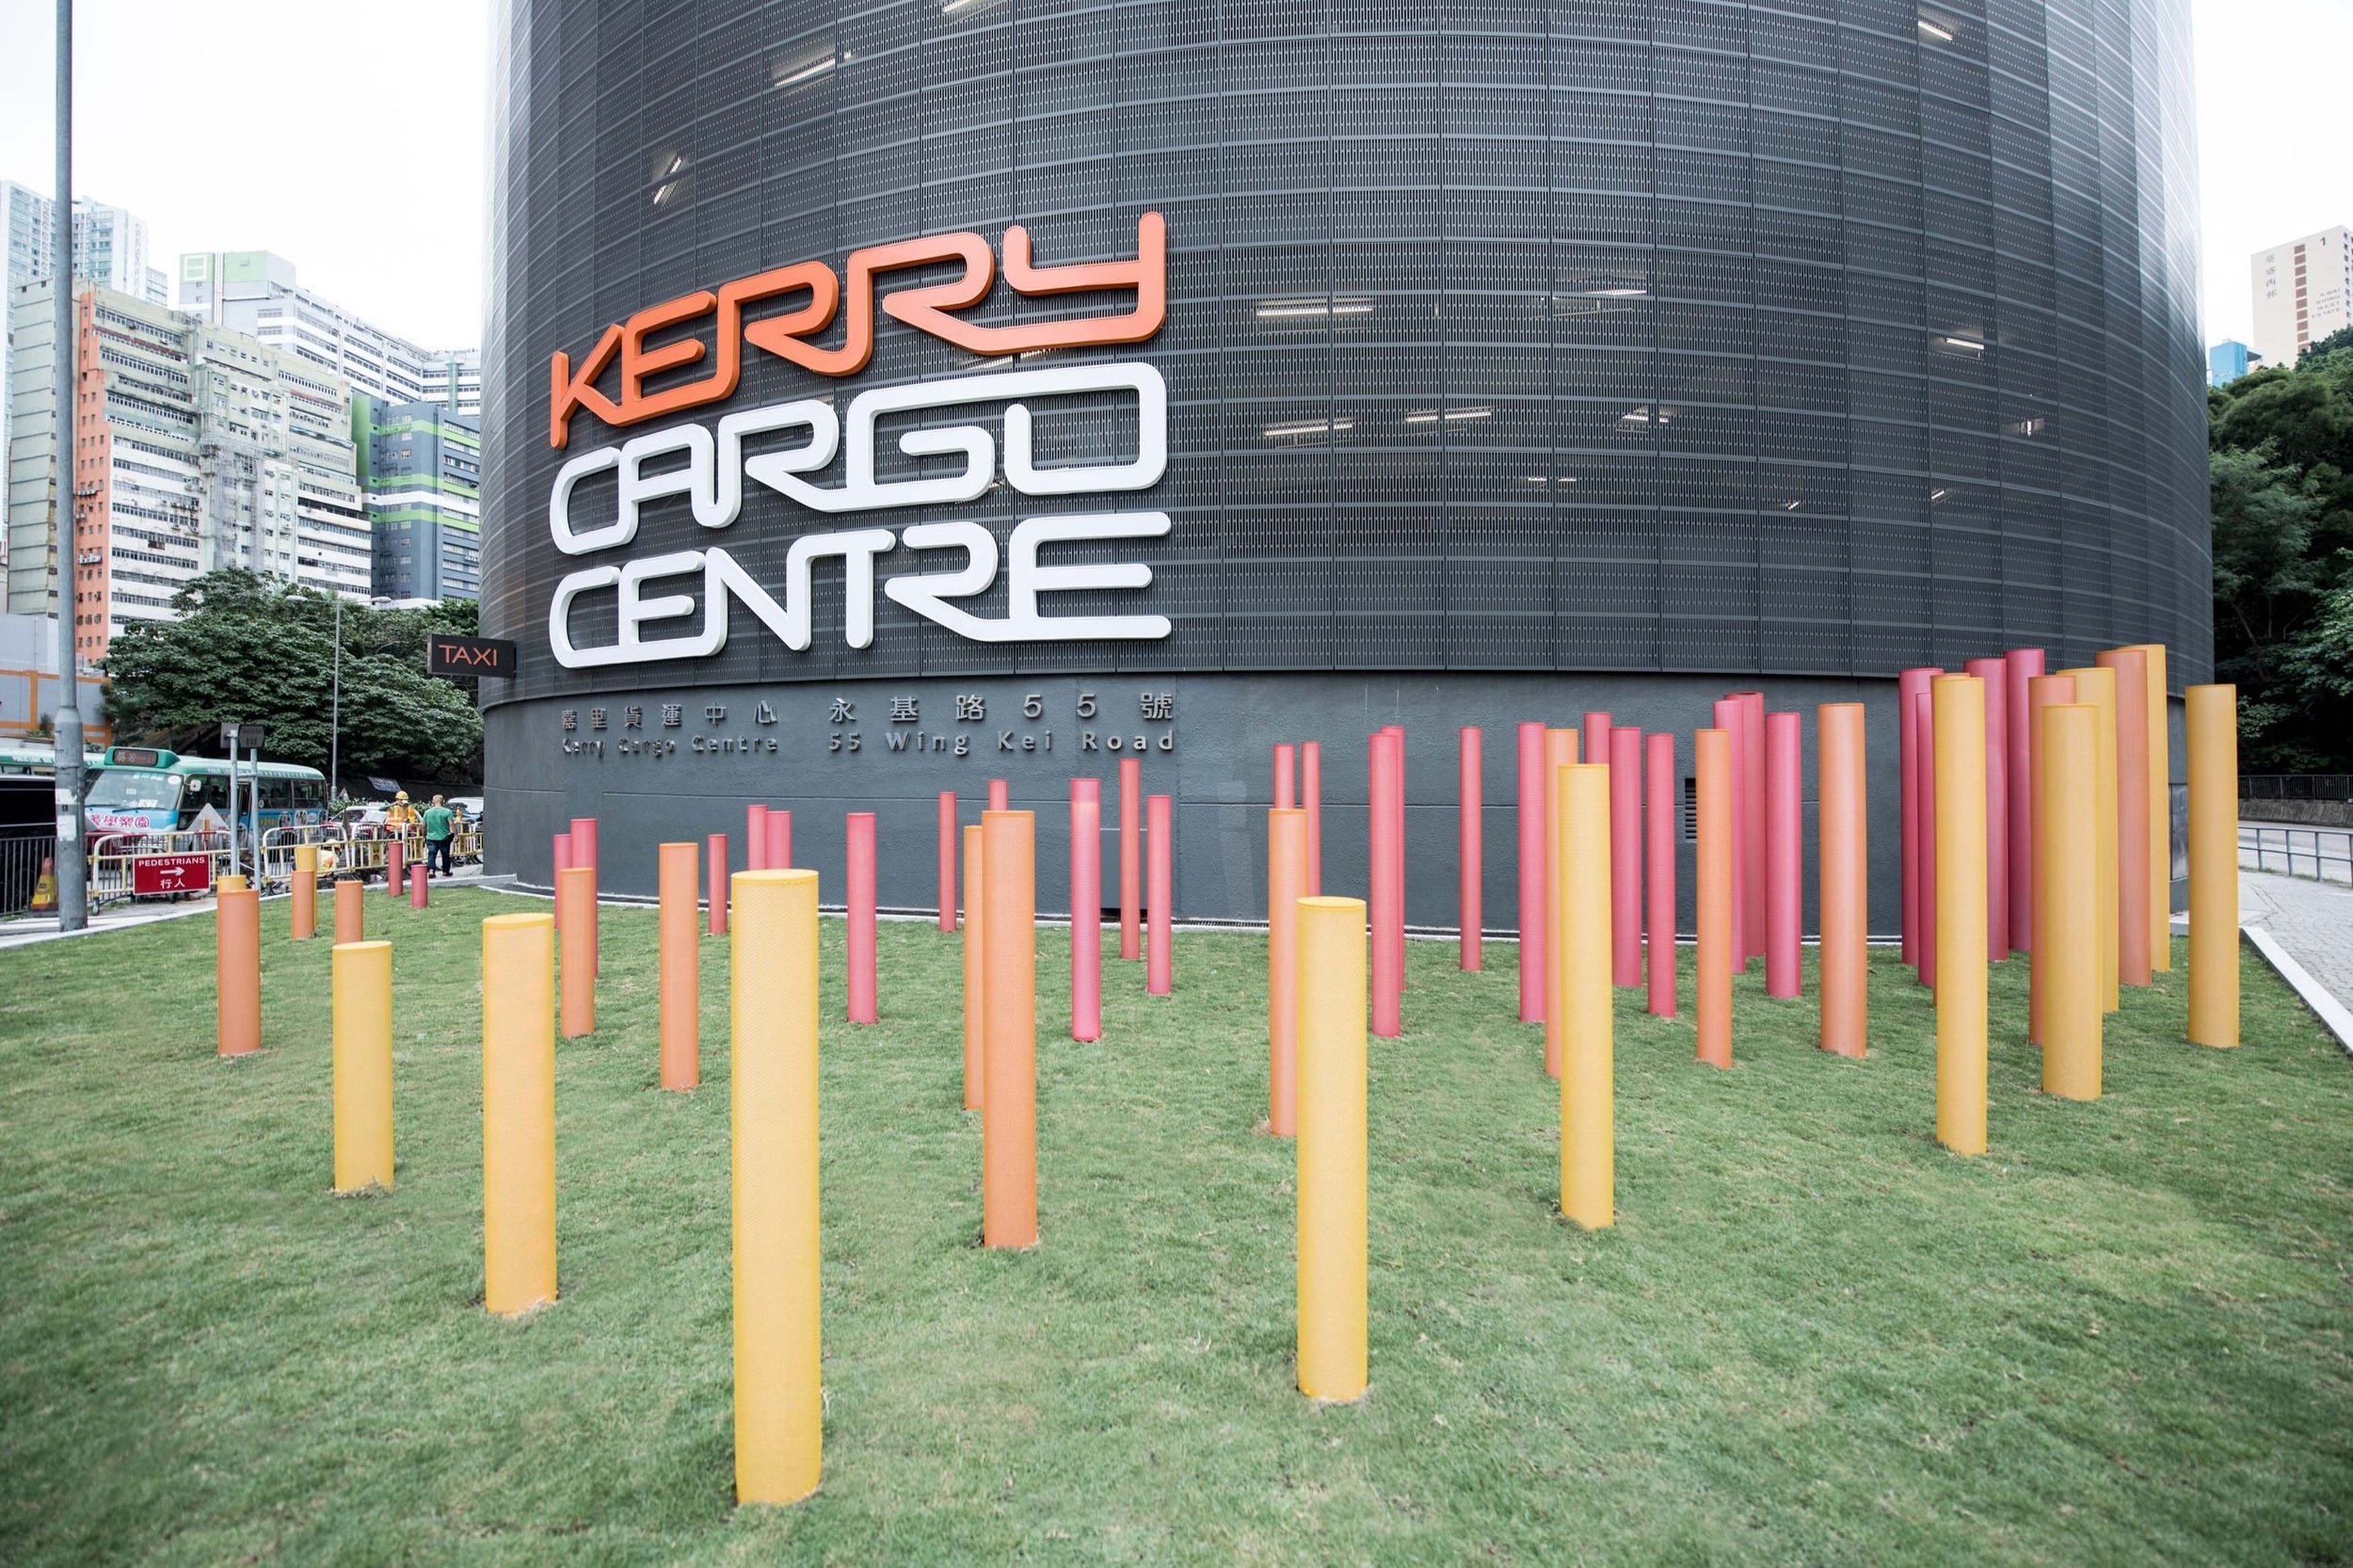 04_Bean+Buro_Art+%26+Installation_Cultural_Kerry+Cargo+Centre.jpg